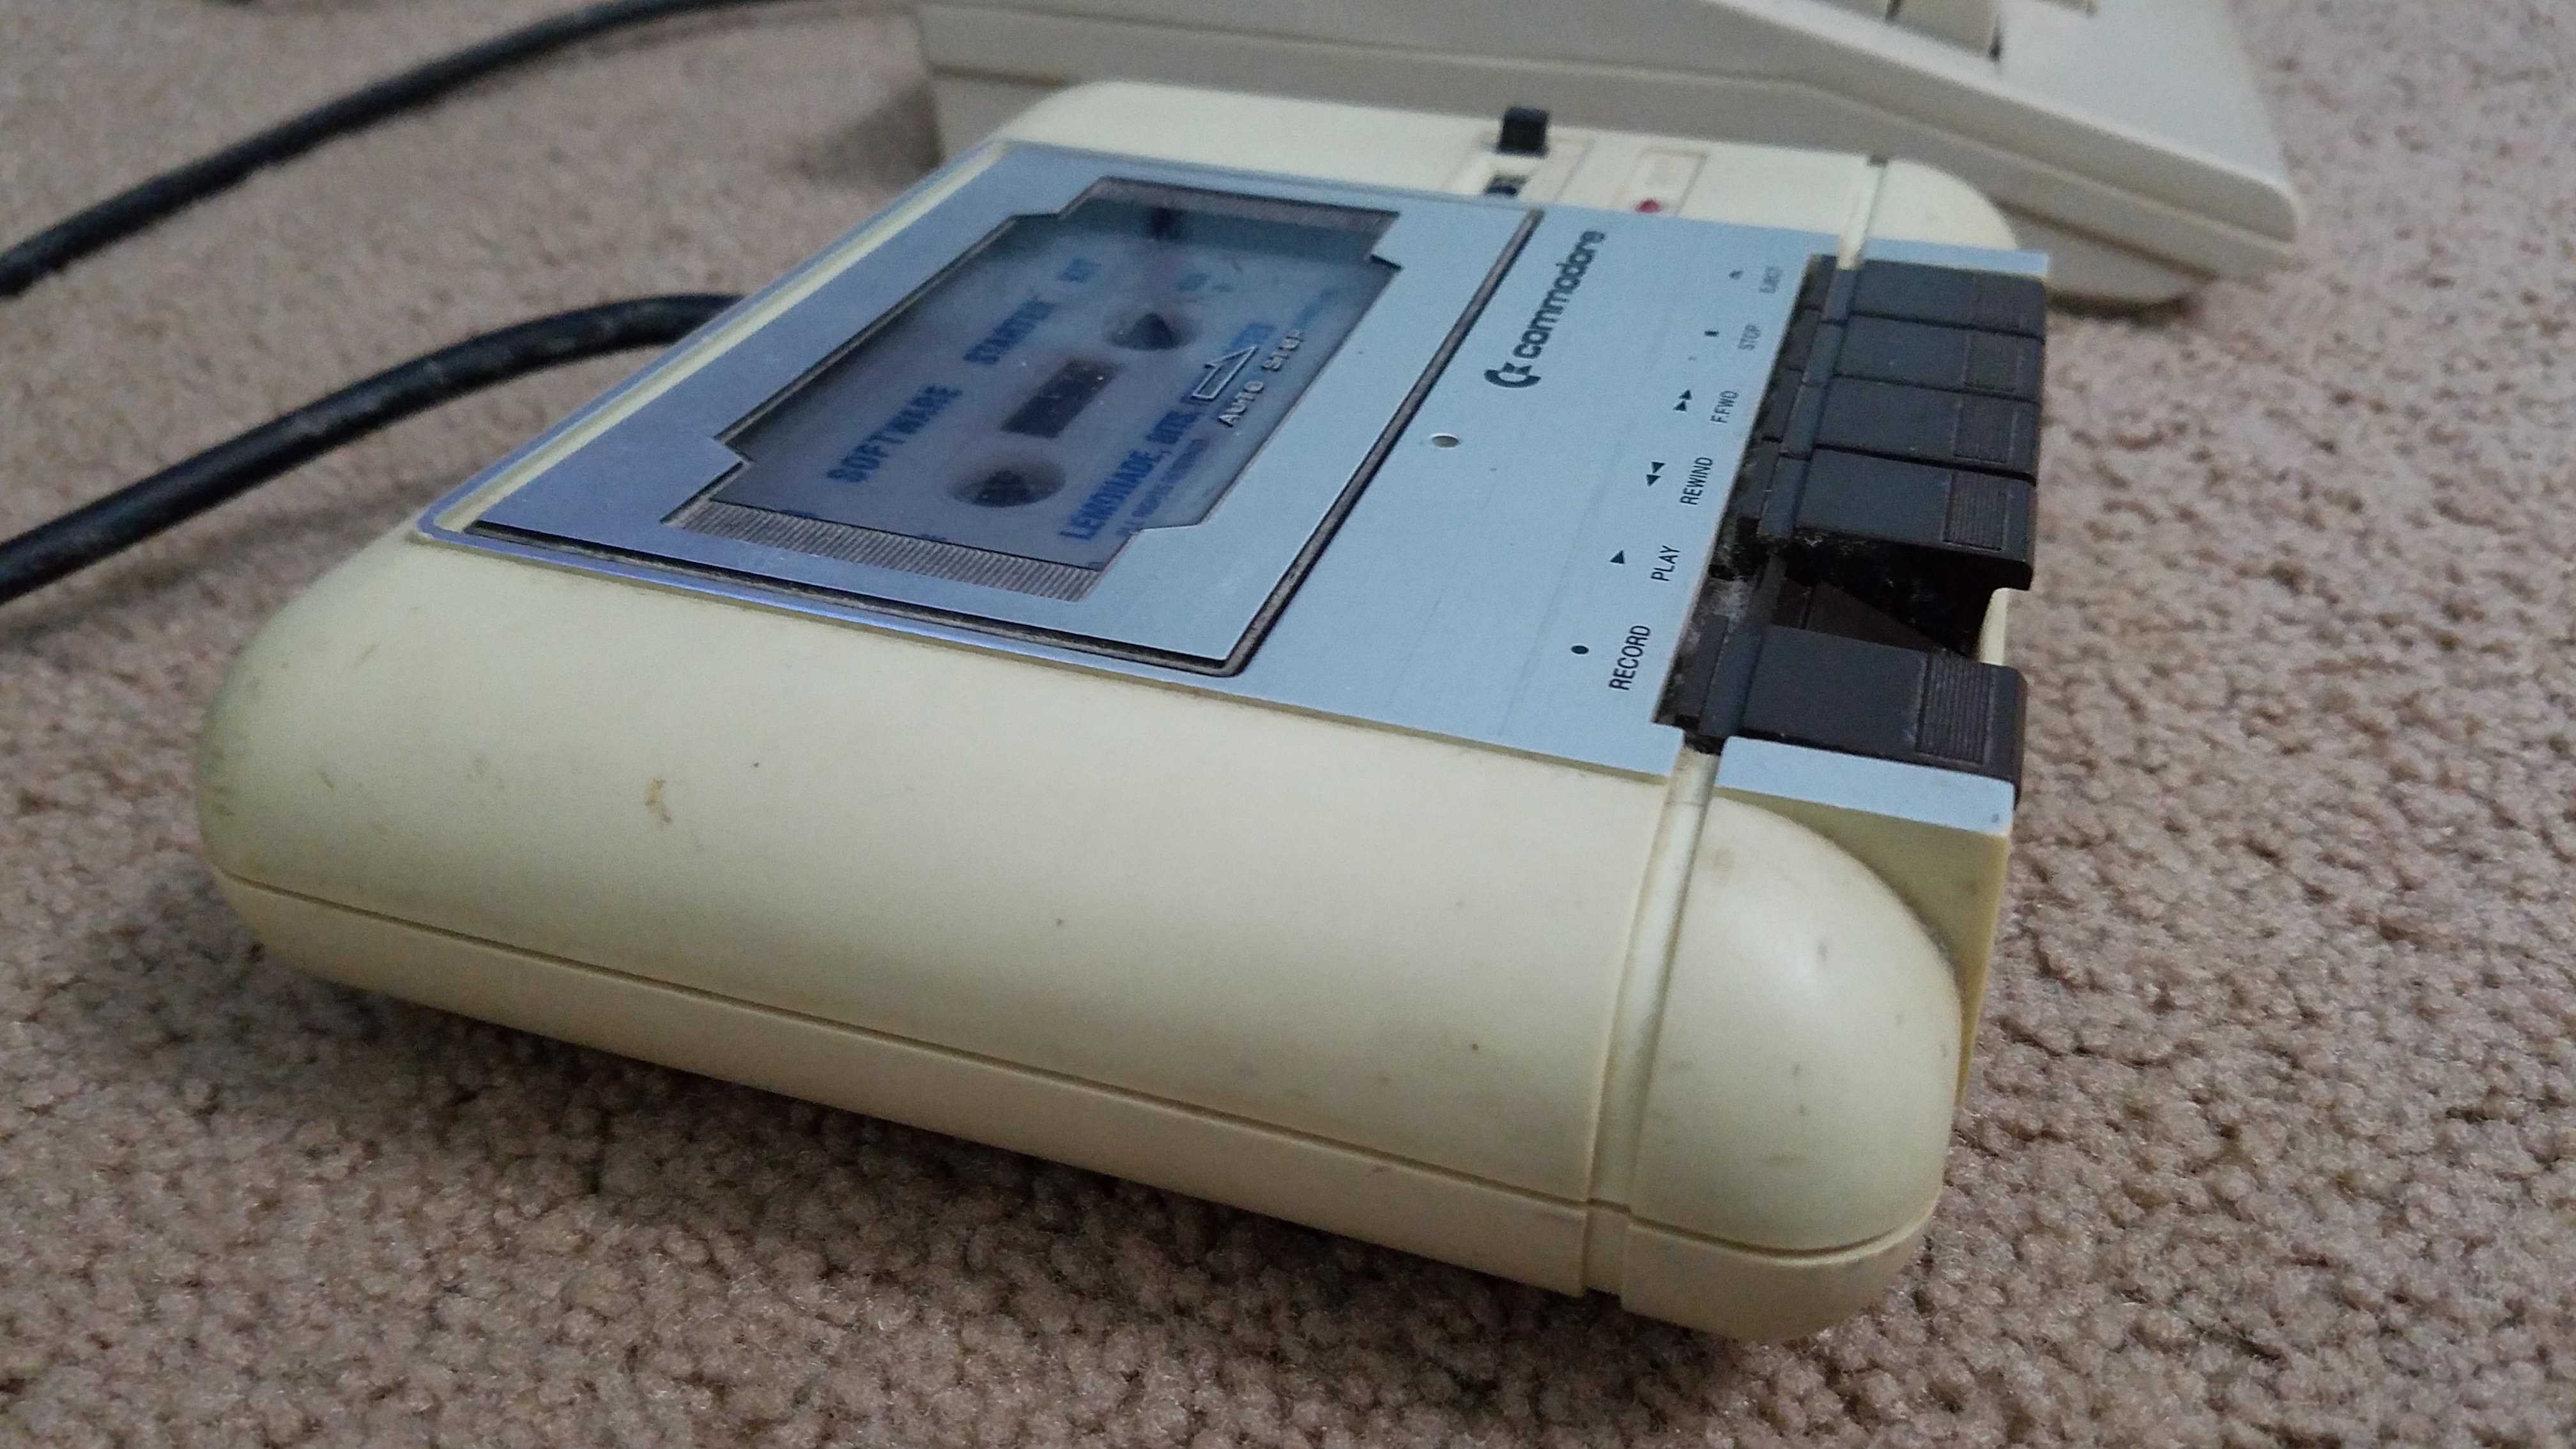 Commodore 1530 c2n datasette photo